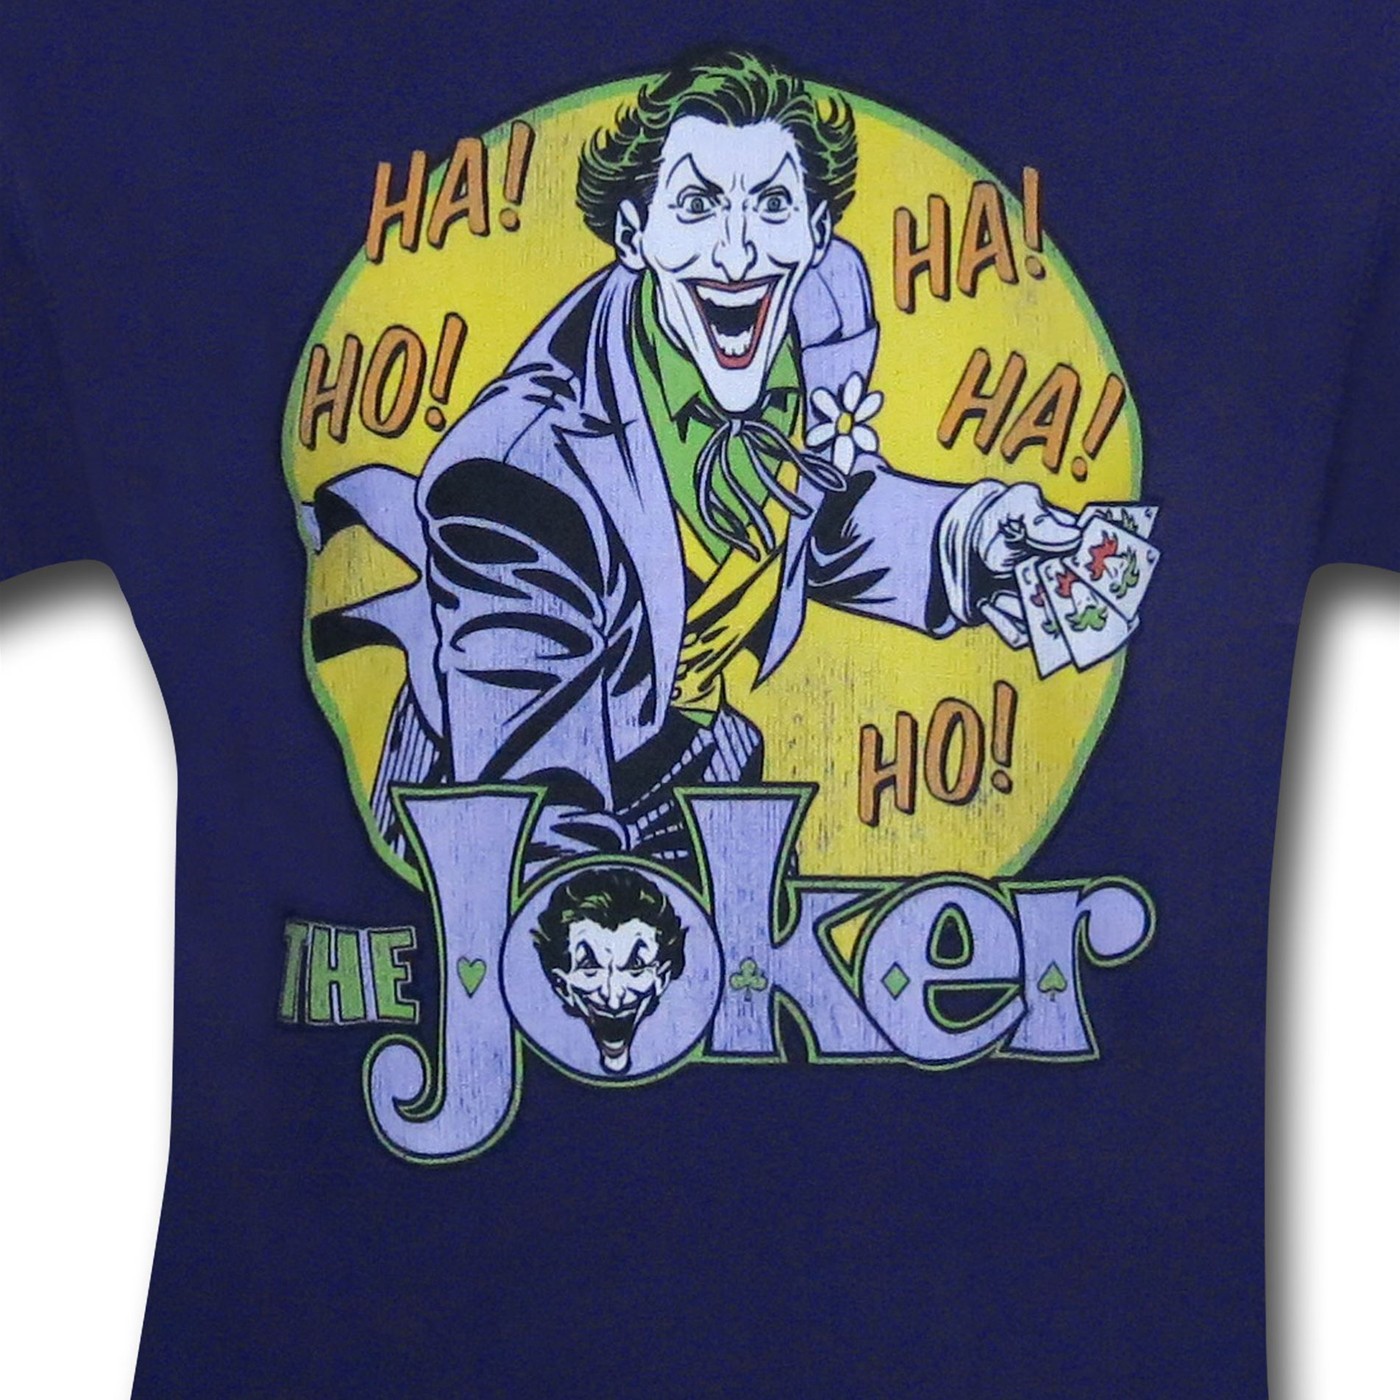 Joker Ho Ha! Men's Purple Retro T-Shirt